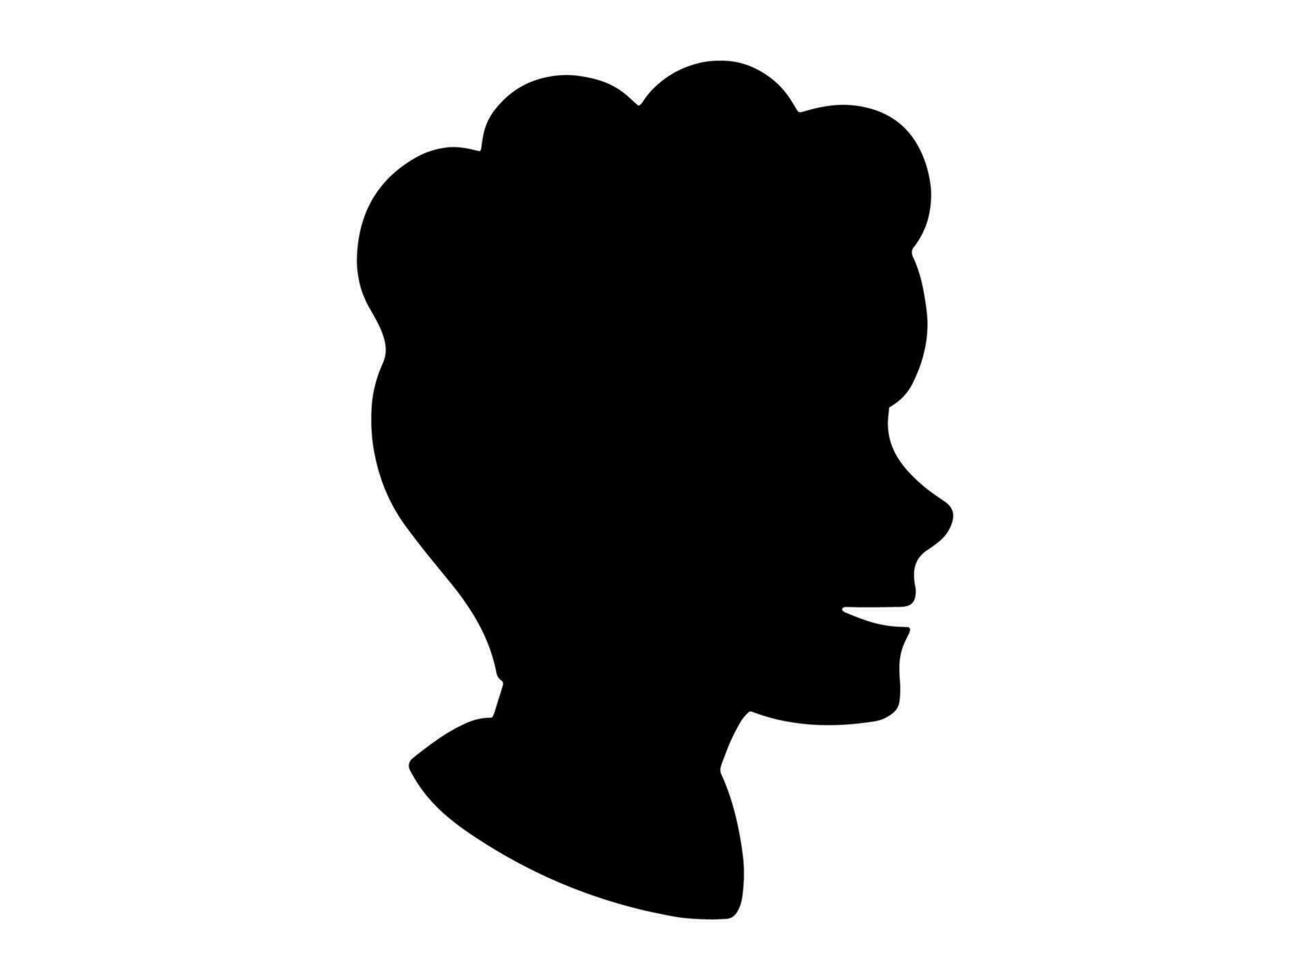 Masculin avatar profil image silhouette vecteur